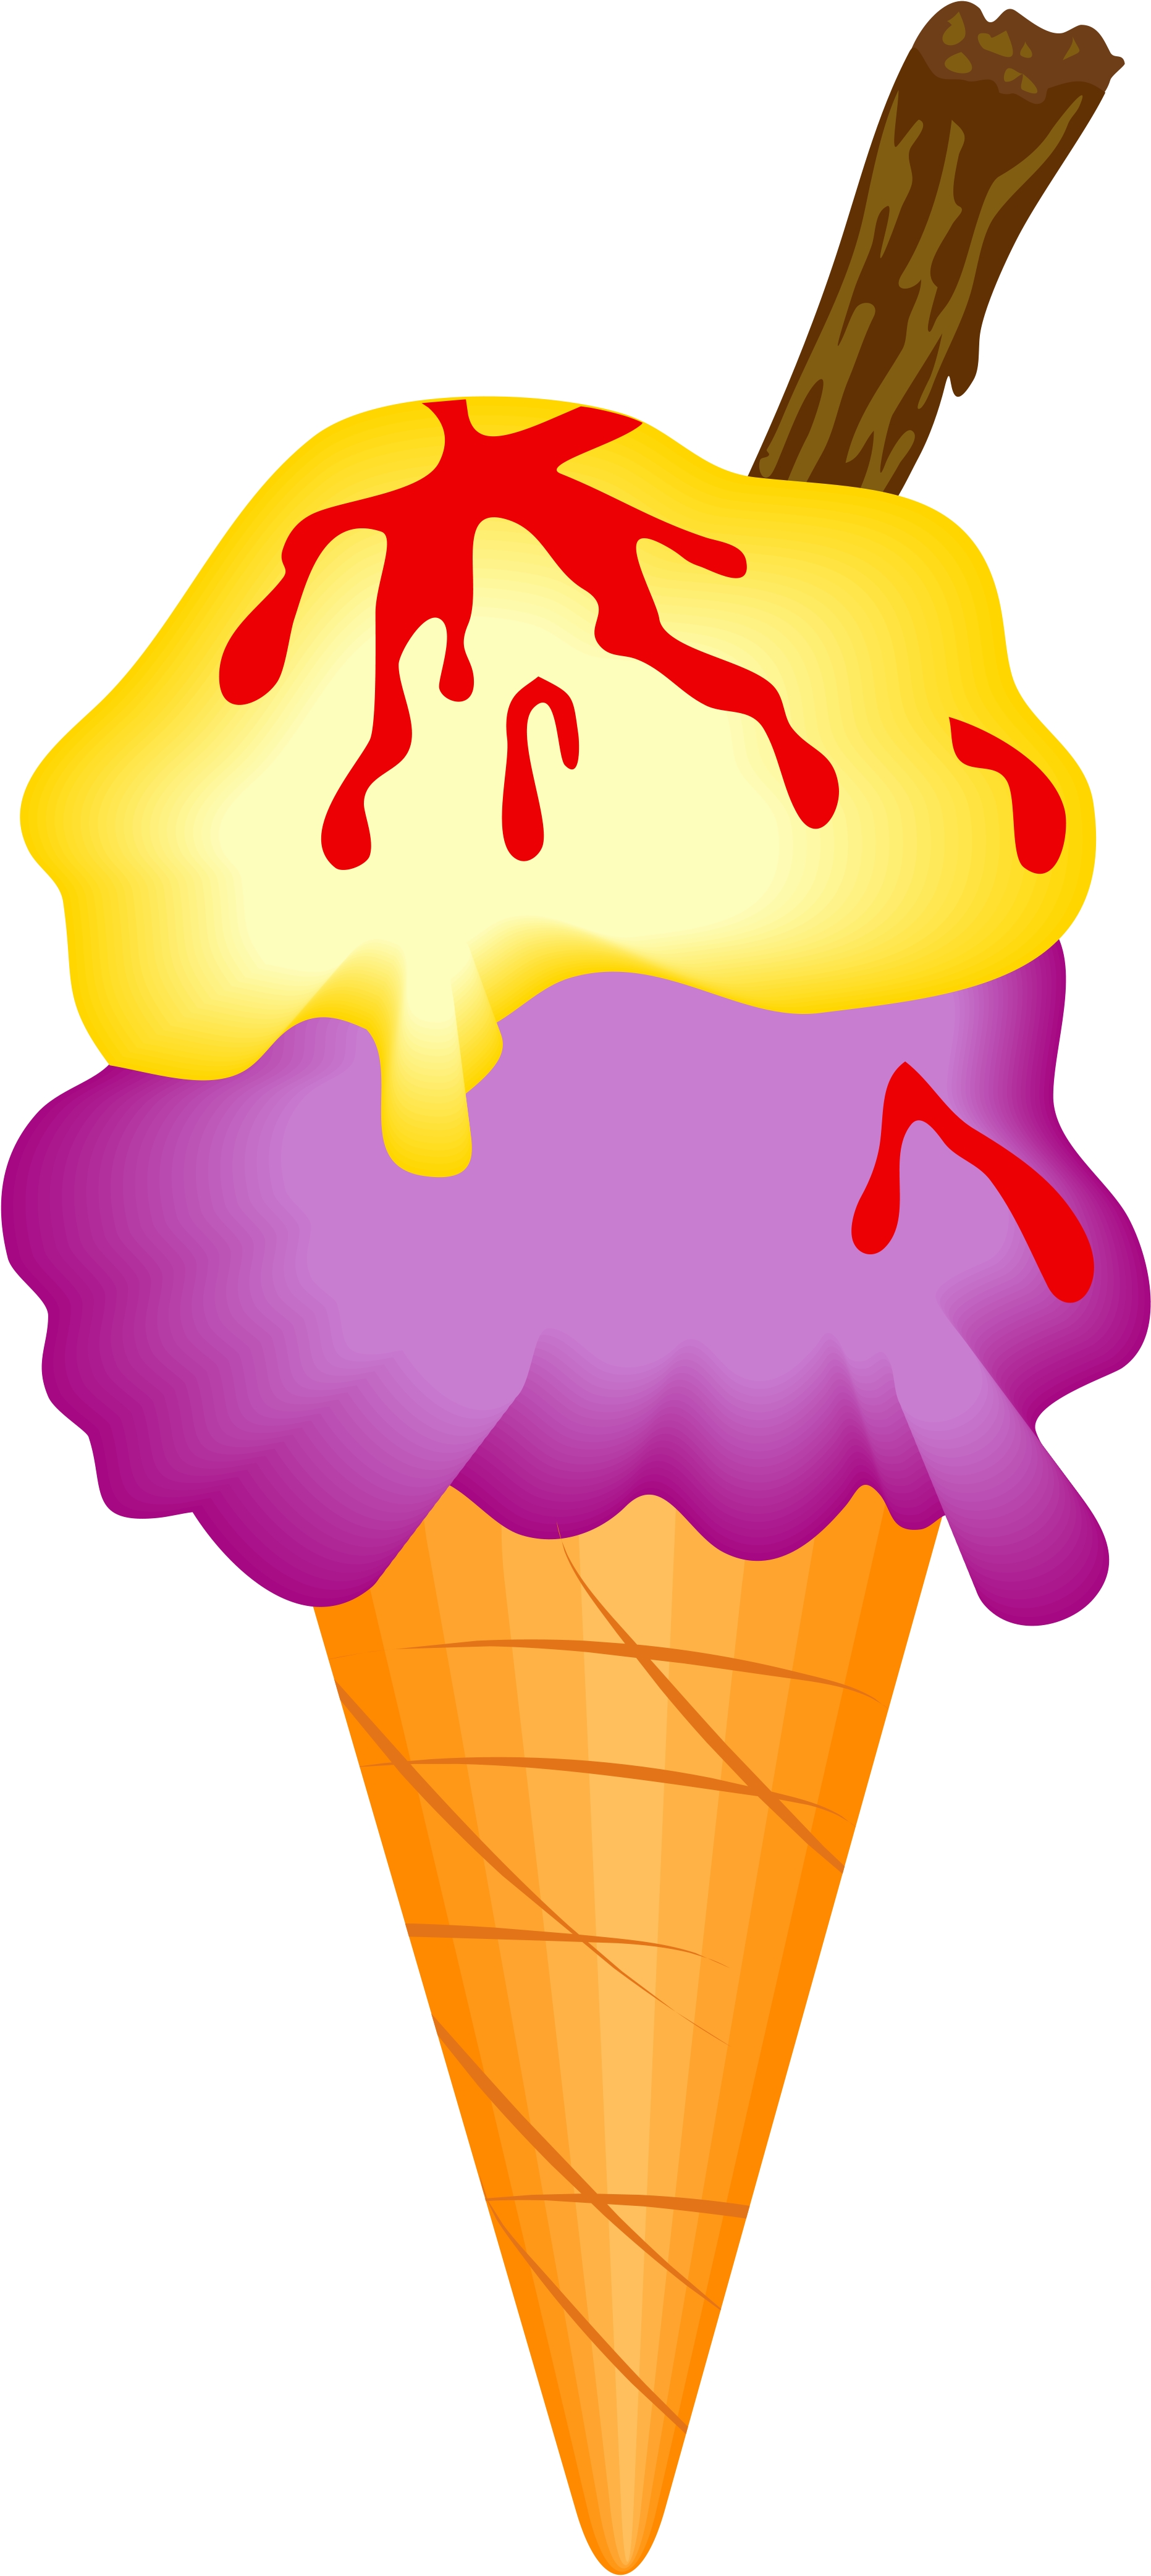 clipart of an ice cream cone - photo #49